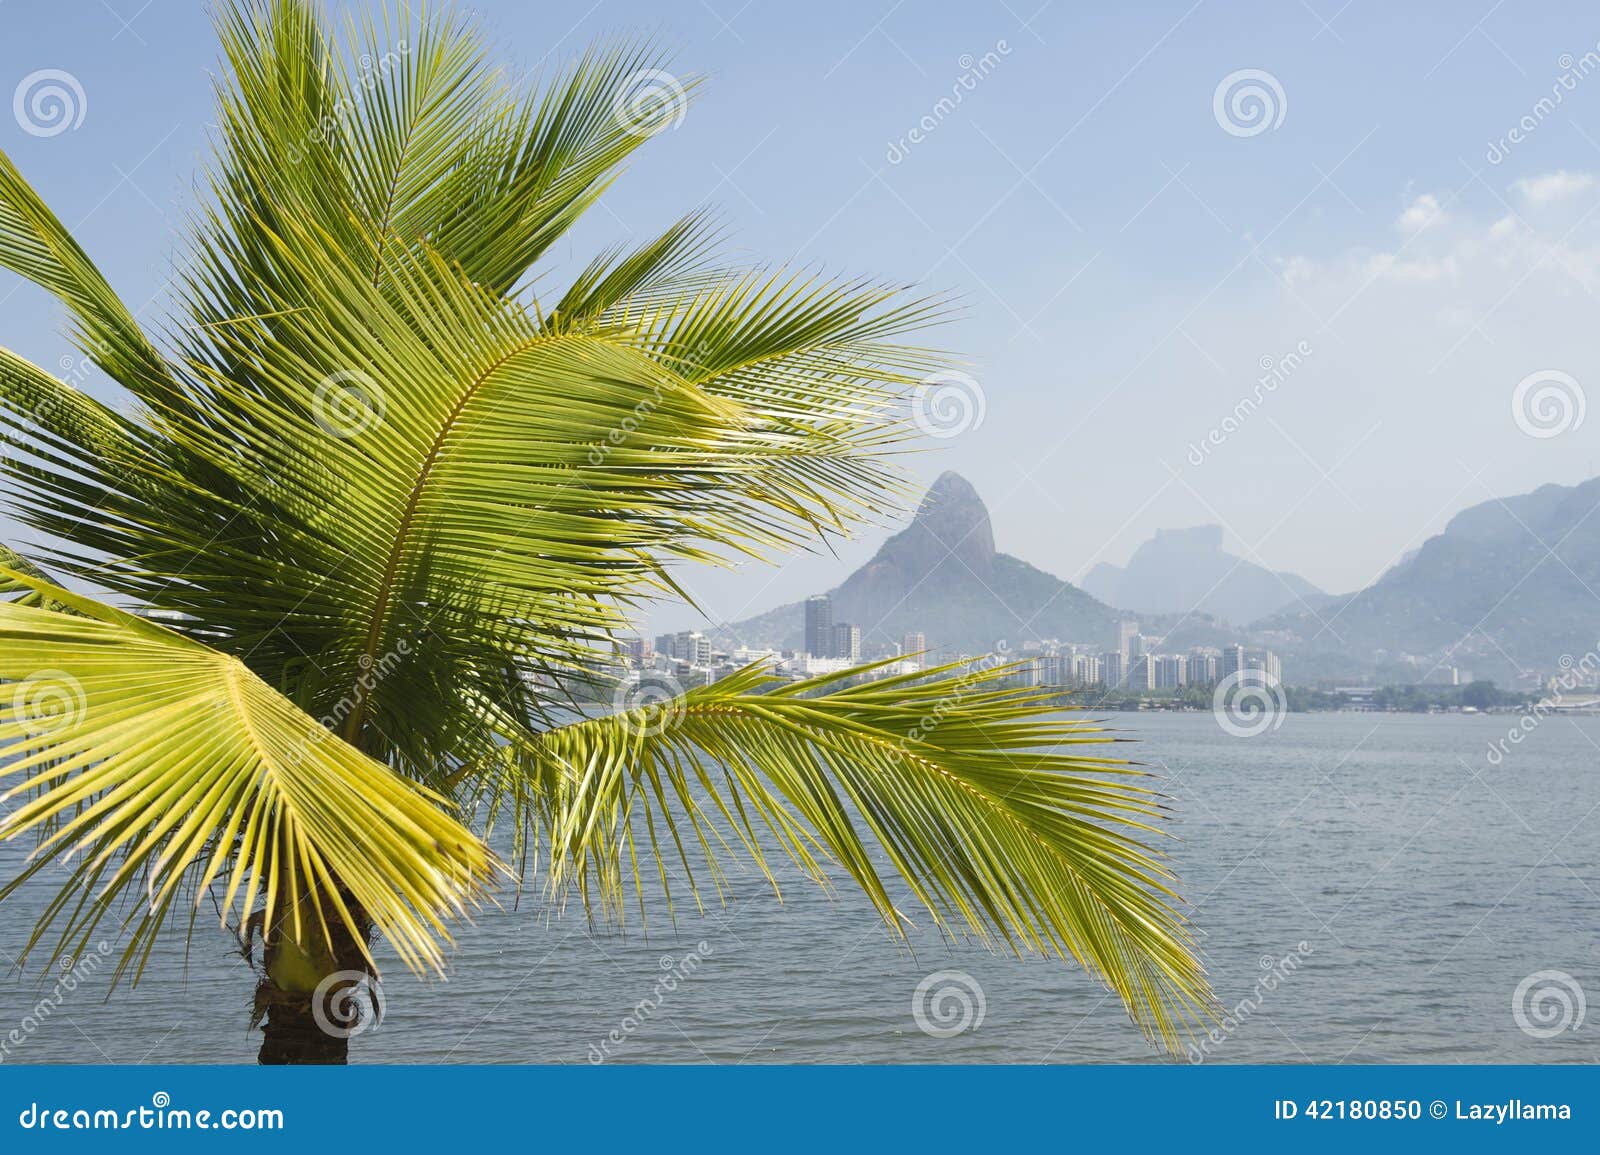 lagoa rio de janeiro brazil scenic skyline palm tree